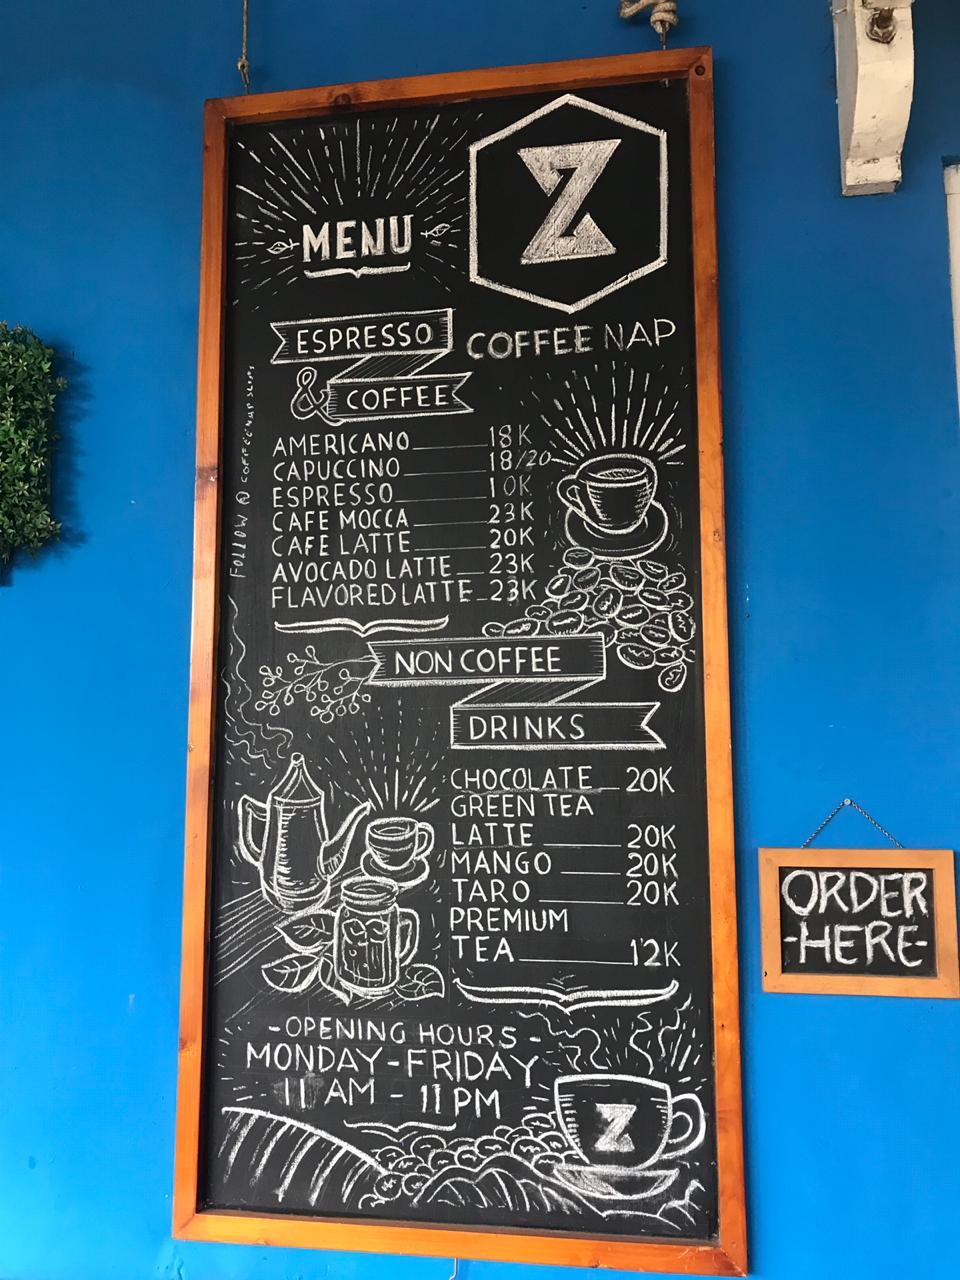 Coffee Nap terdekat - Restoran dan Tempat Makan Kafe terdekat di Jakarta